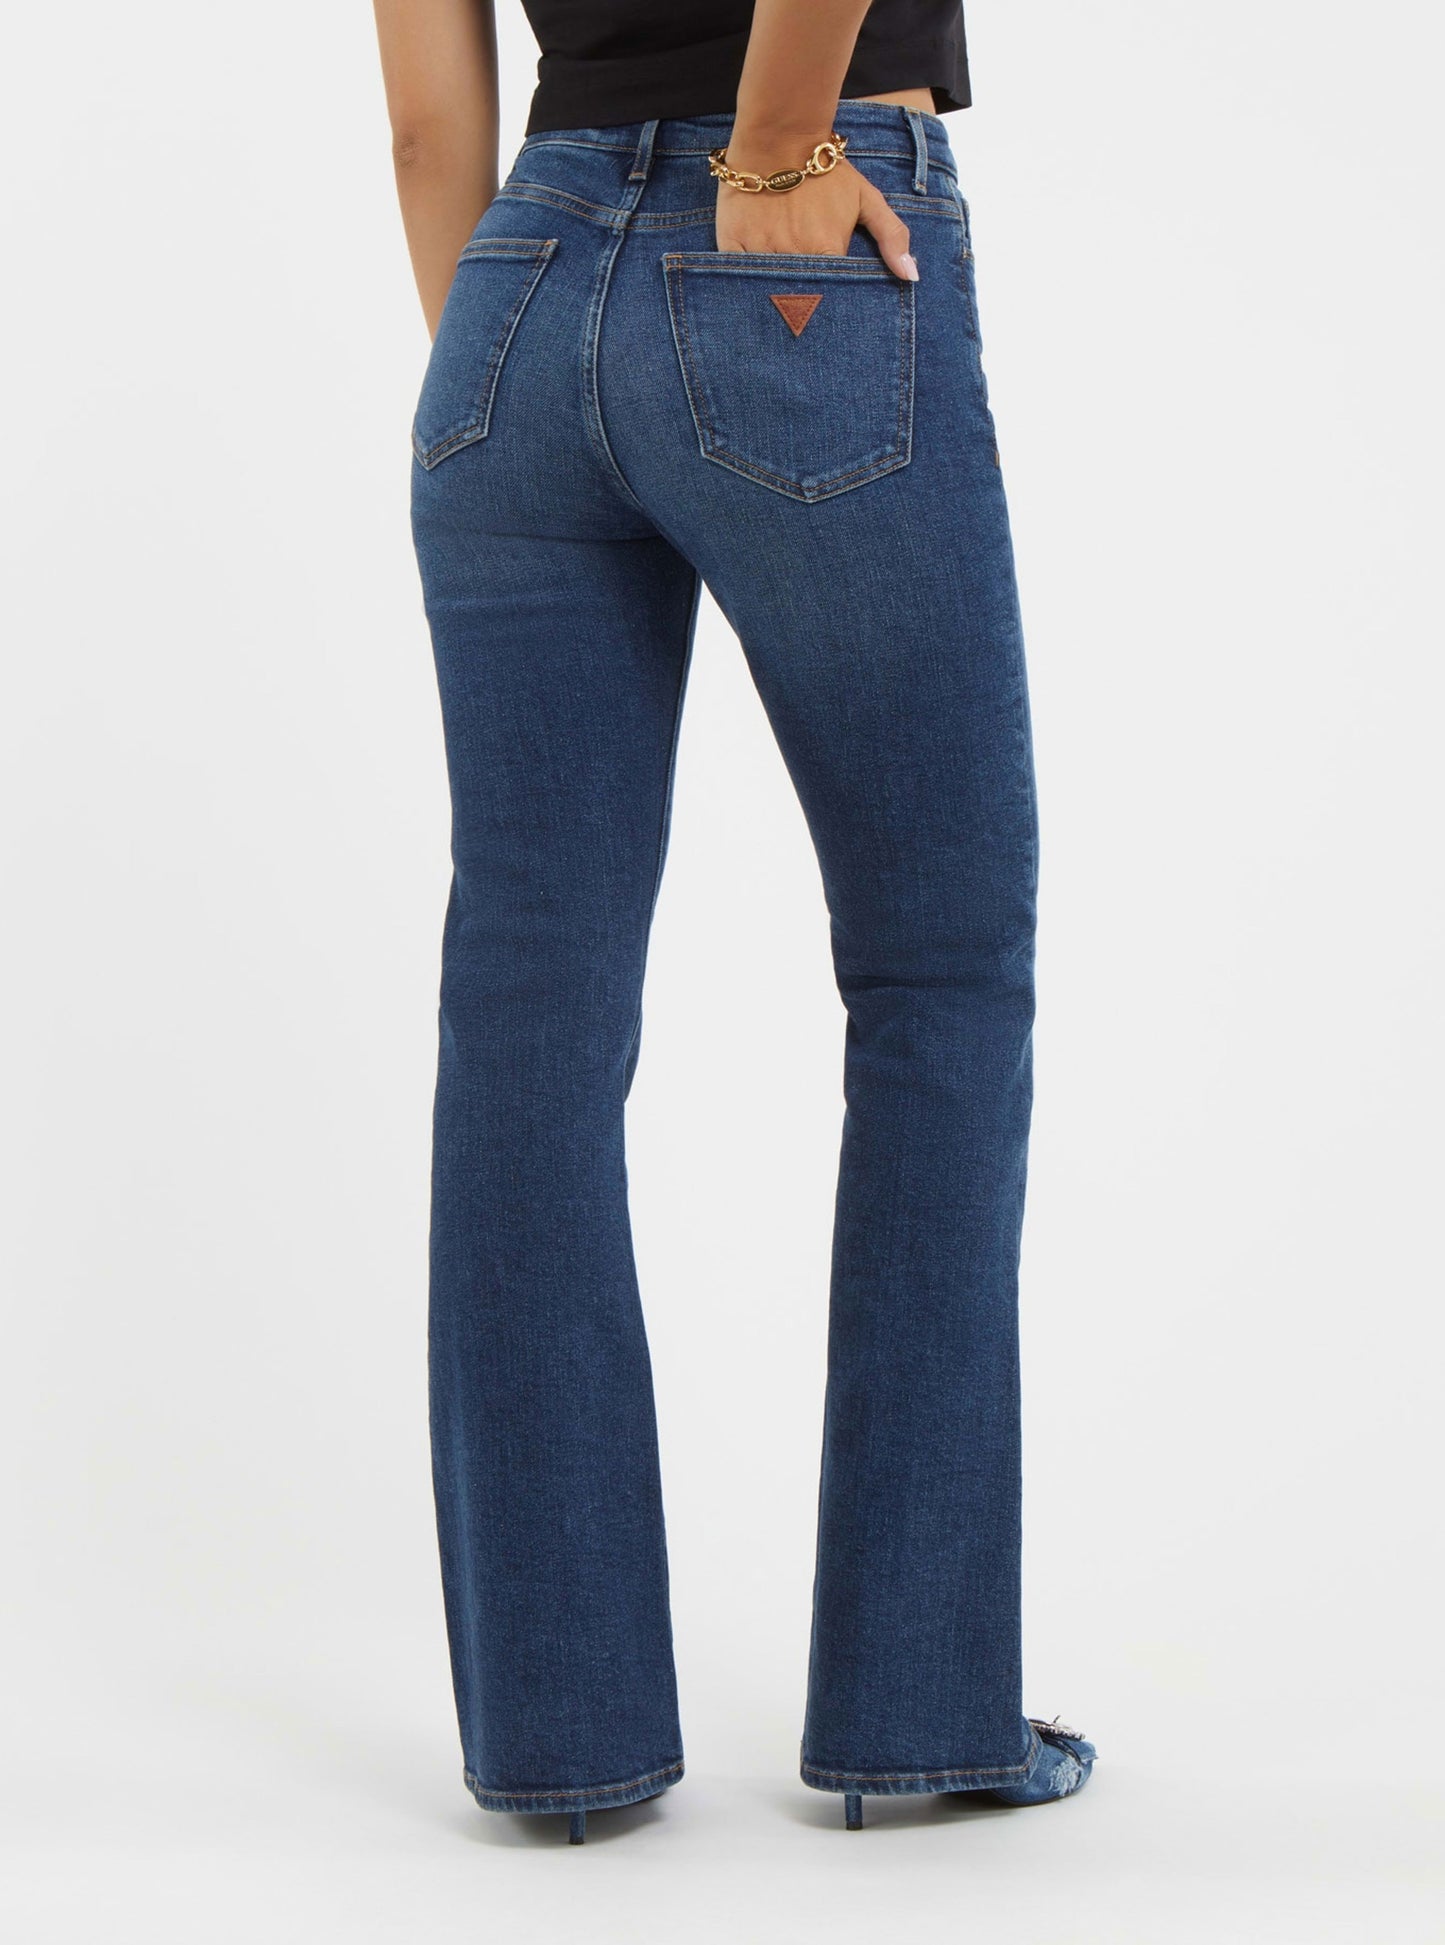 High-Rise Sexy Flare Leg Denim Jeans In Harrison Blue Wash | GUESS Women's Denim | back view